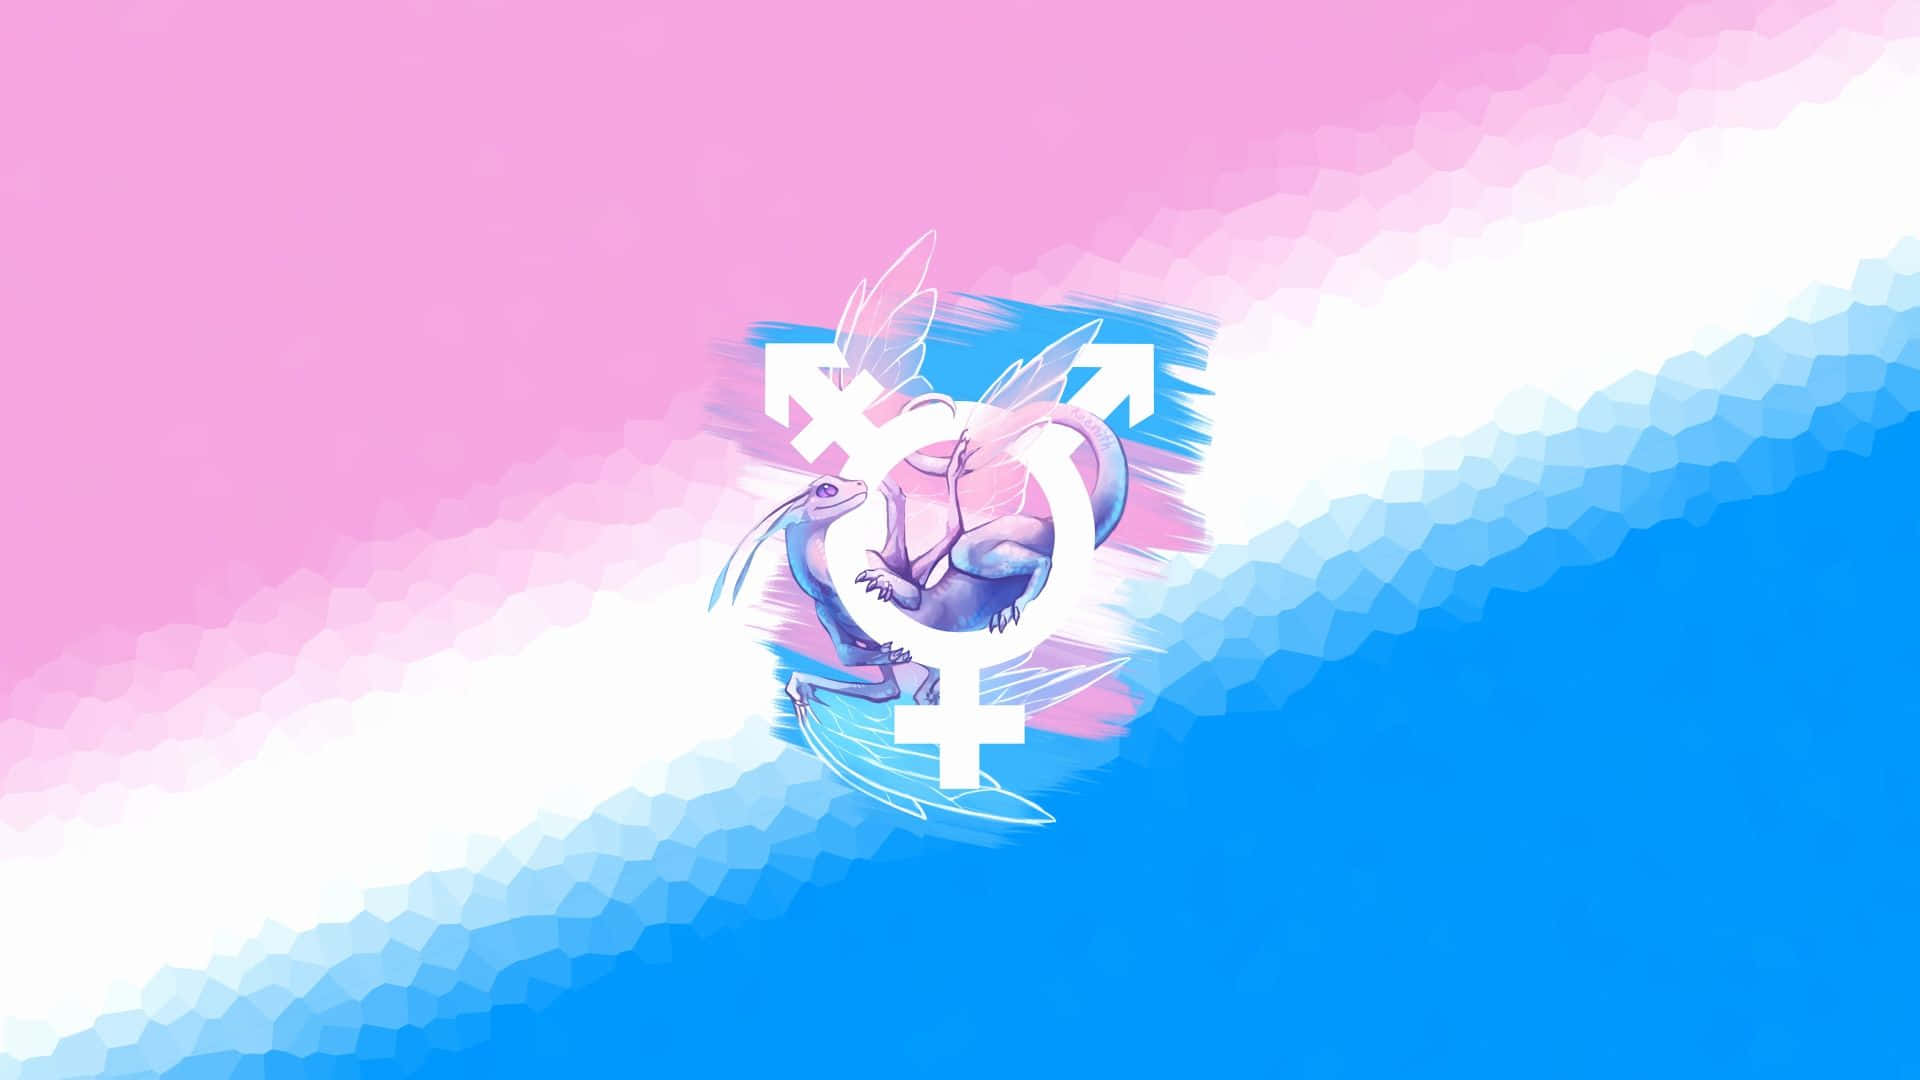 Trans Symbol With A Dragon Wallpaper